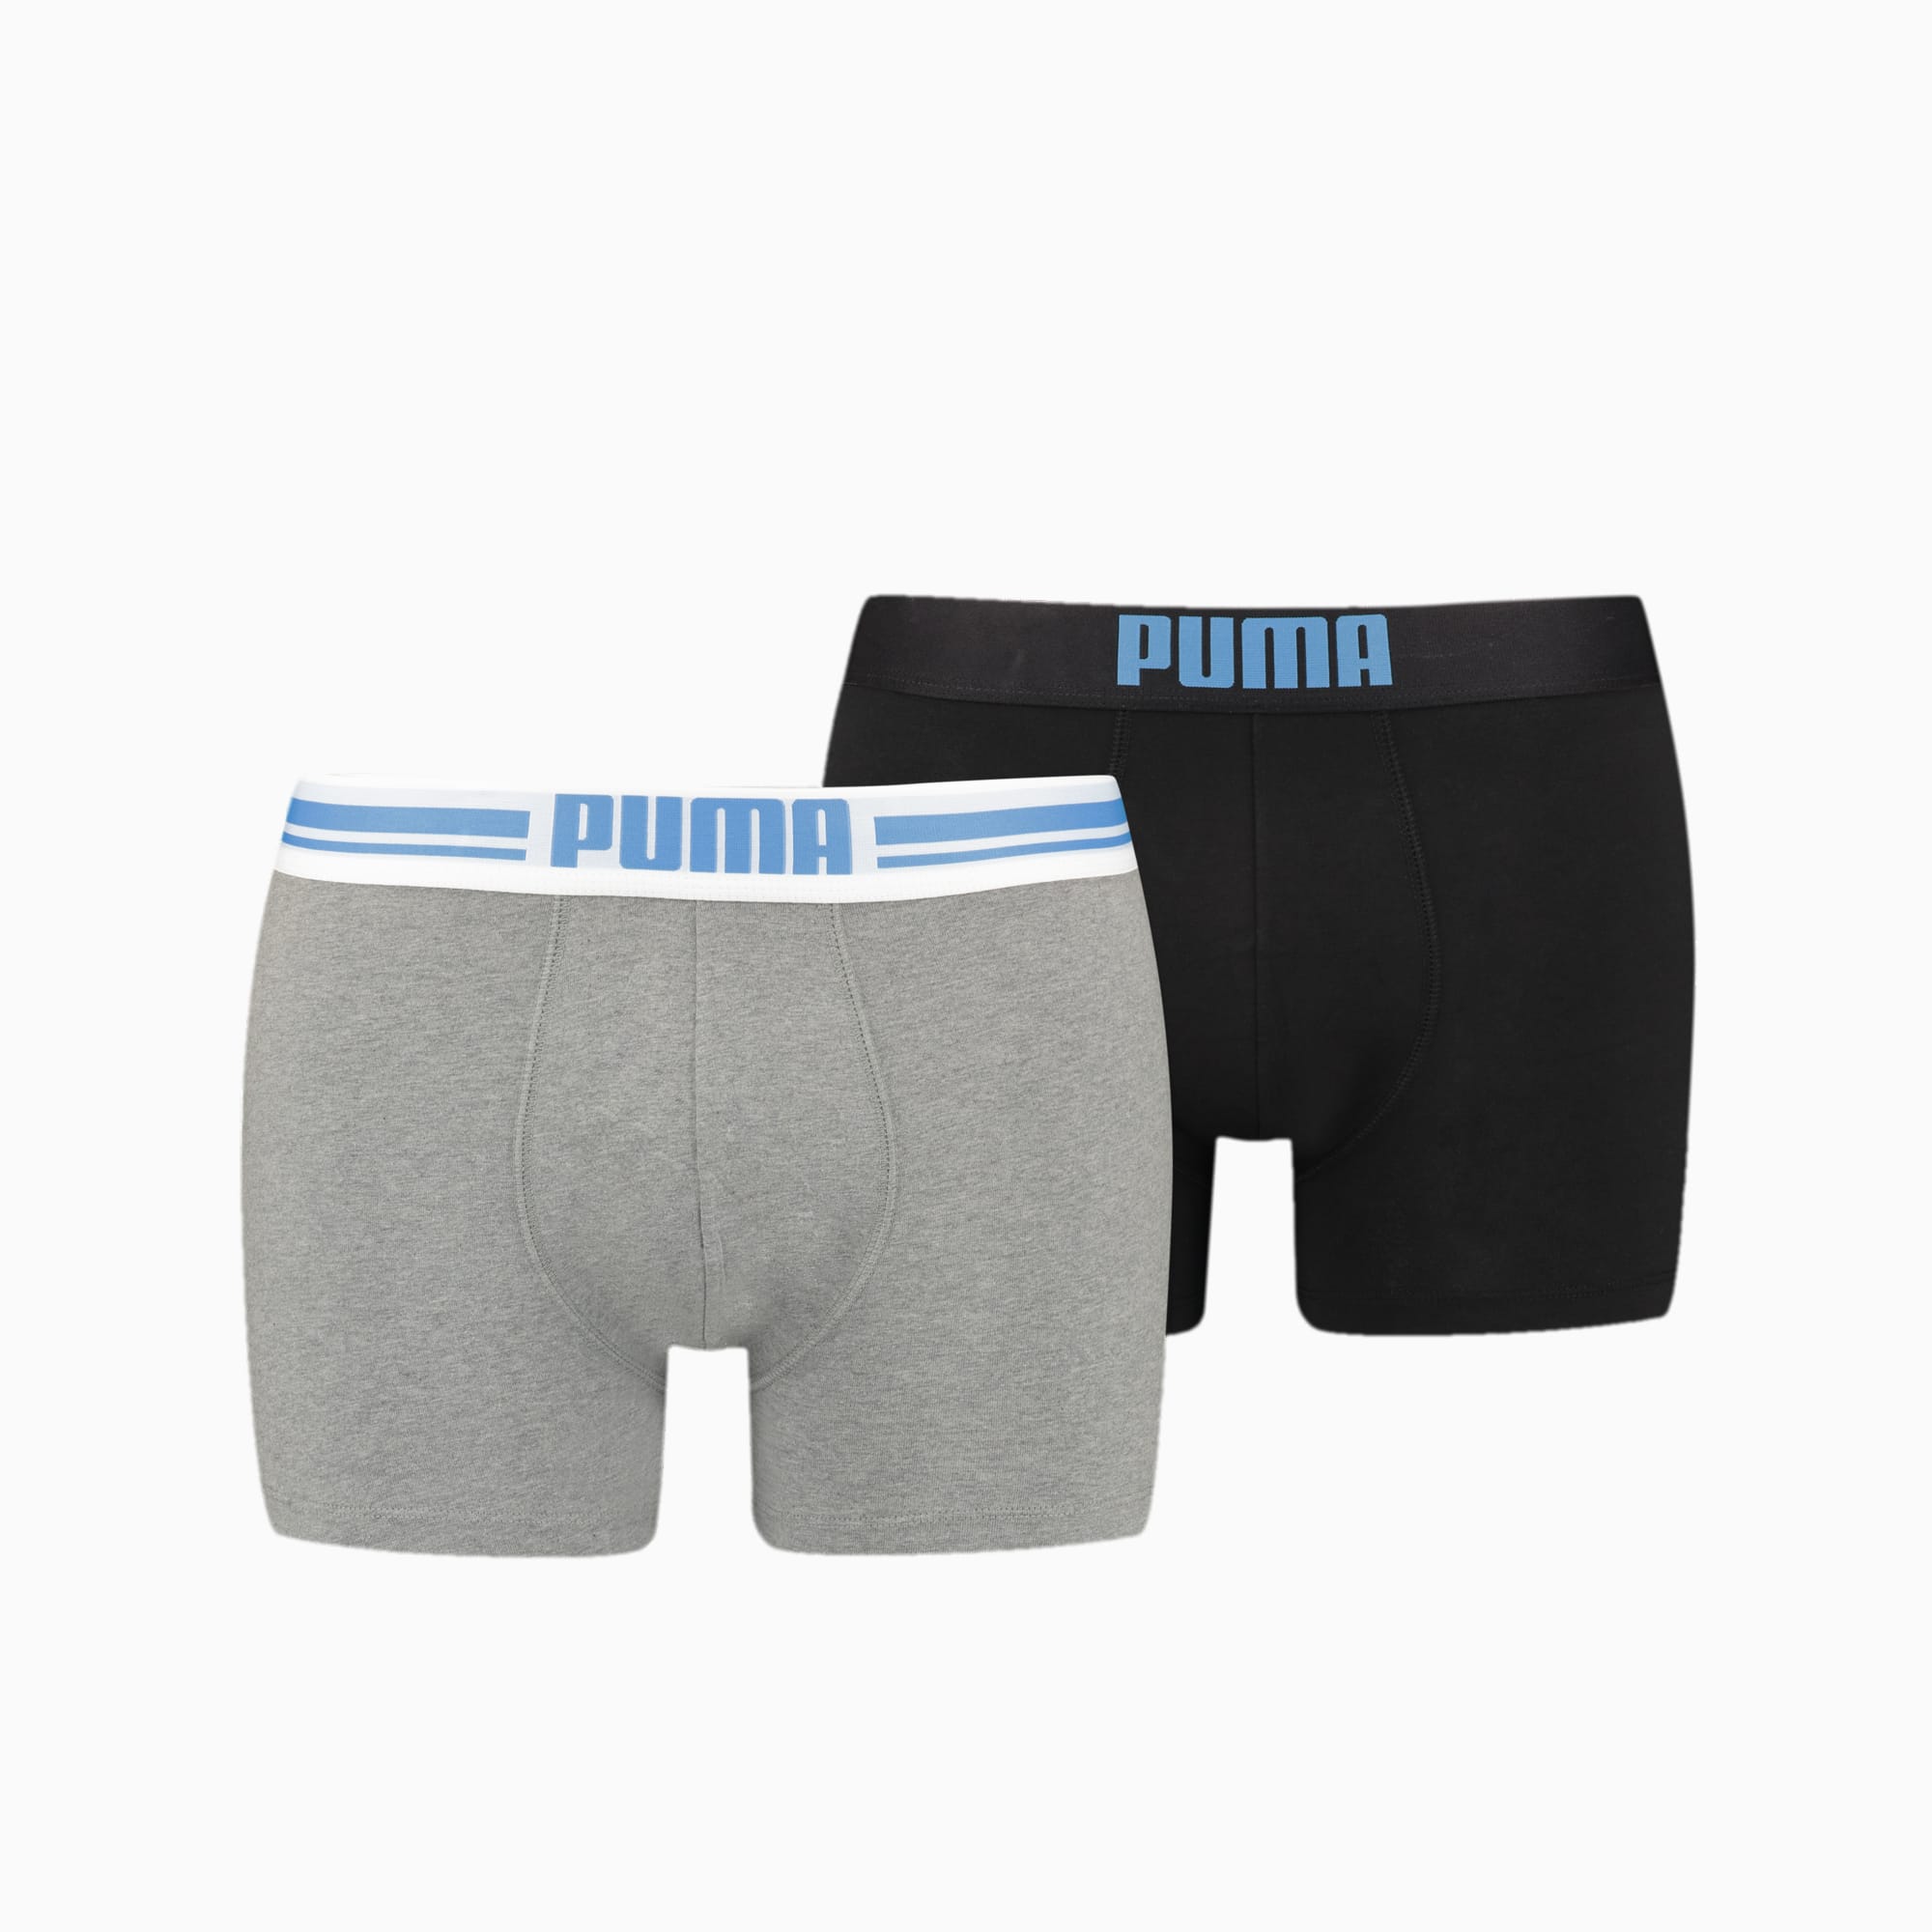 PUMA Placed Logo Herren-Boxershorts 2er-Pack, Grau/Blau, Größe: L, Kleidung